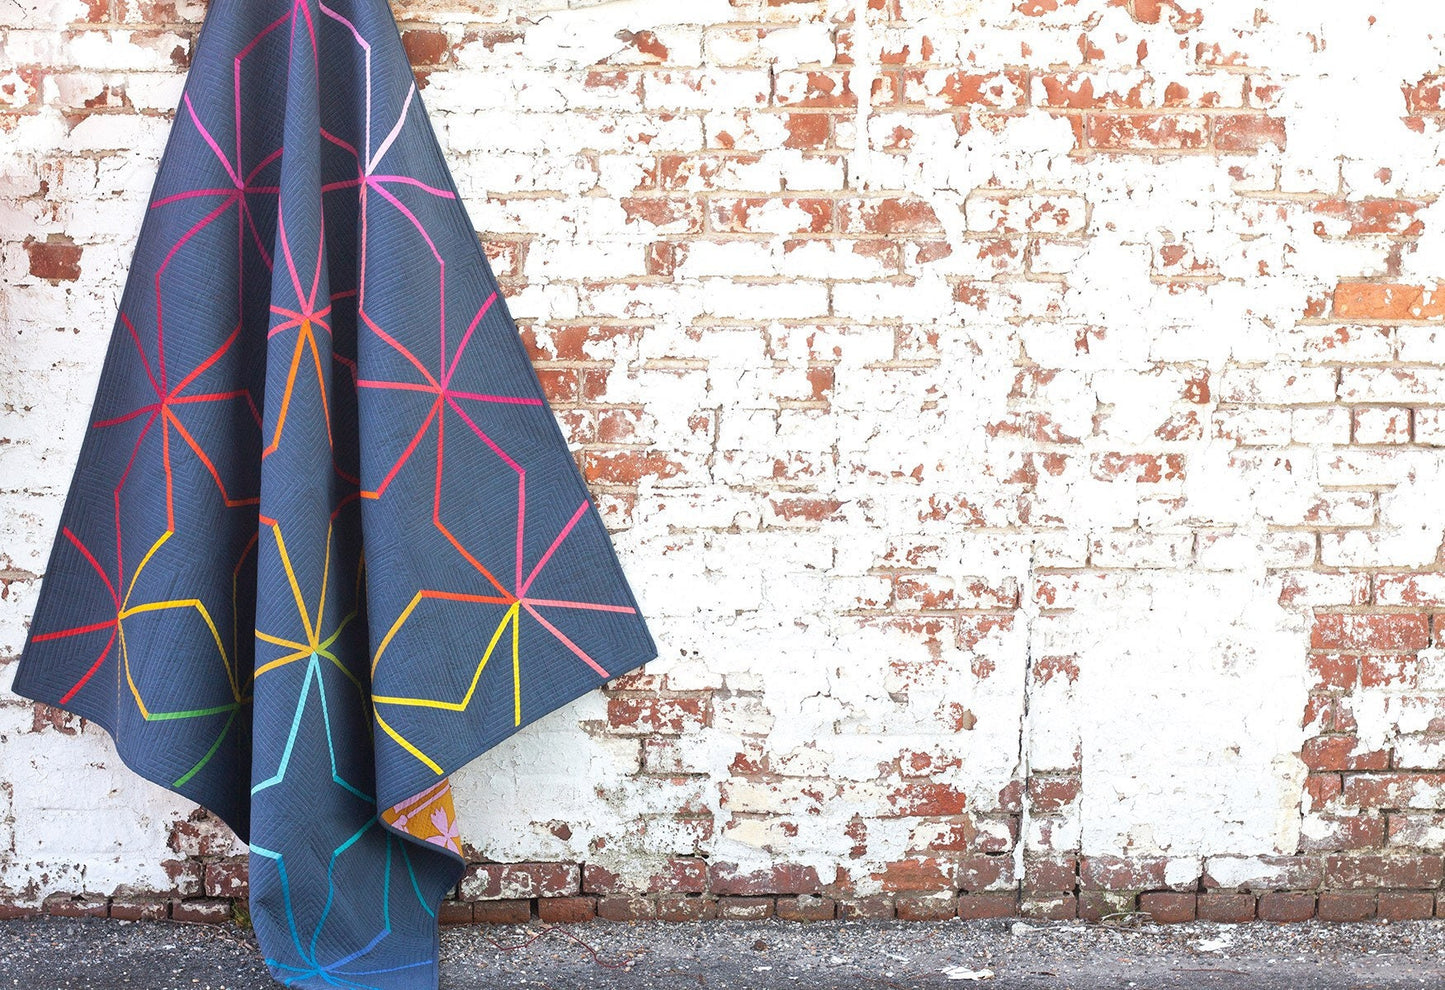 Lumen Quilt Pattern - Alison Glass - Nydia Kehnle - Foundation Paper Piecing